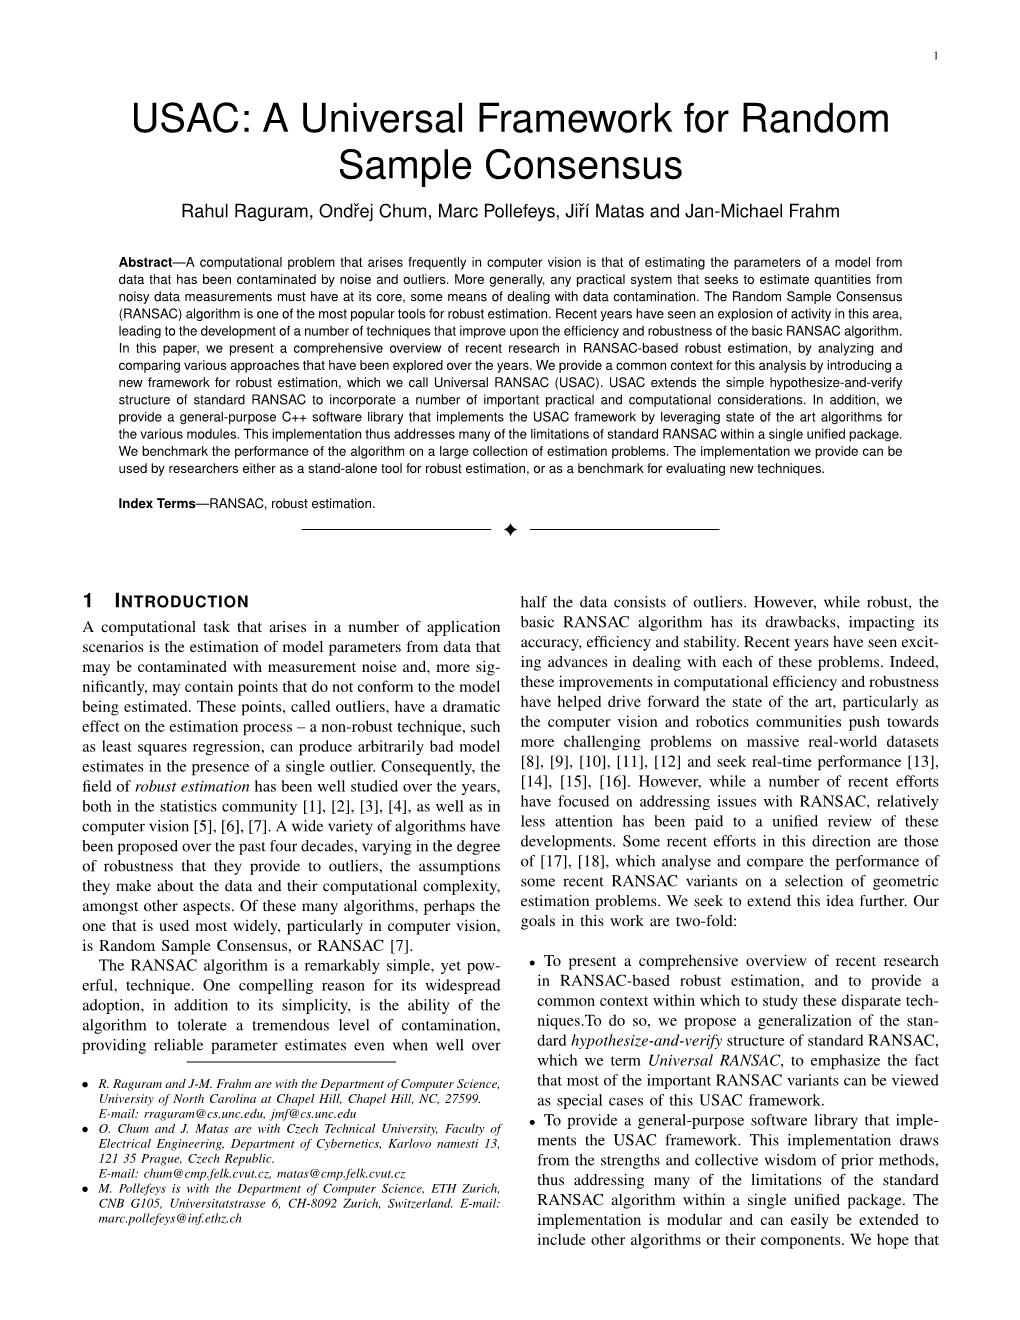 USAC: a Universal Framework for Random Sample Consensus Rahul Raguram, Ondrejˇ Chum, Marc Pollefeys, Jirˇ´I Matas and Jan-Michael Frahm